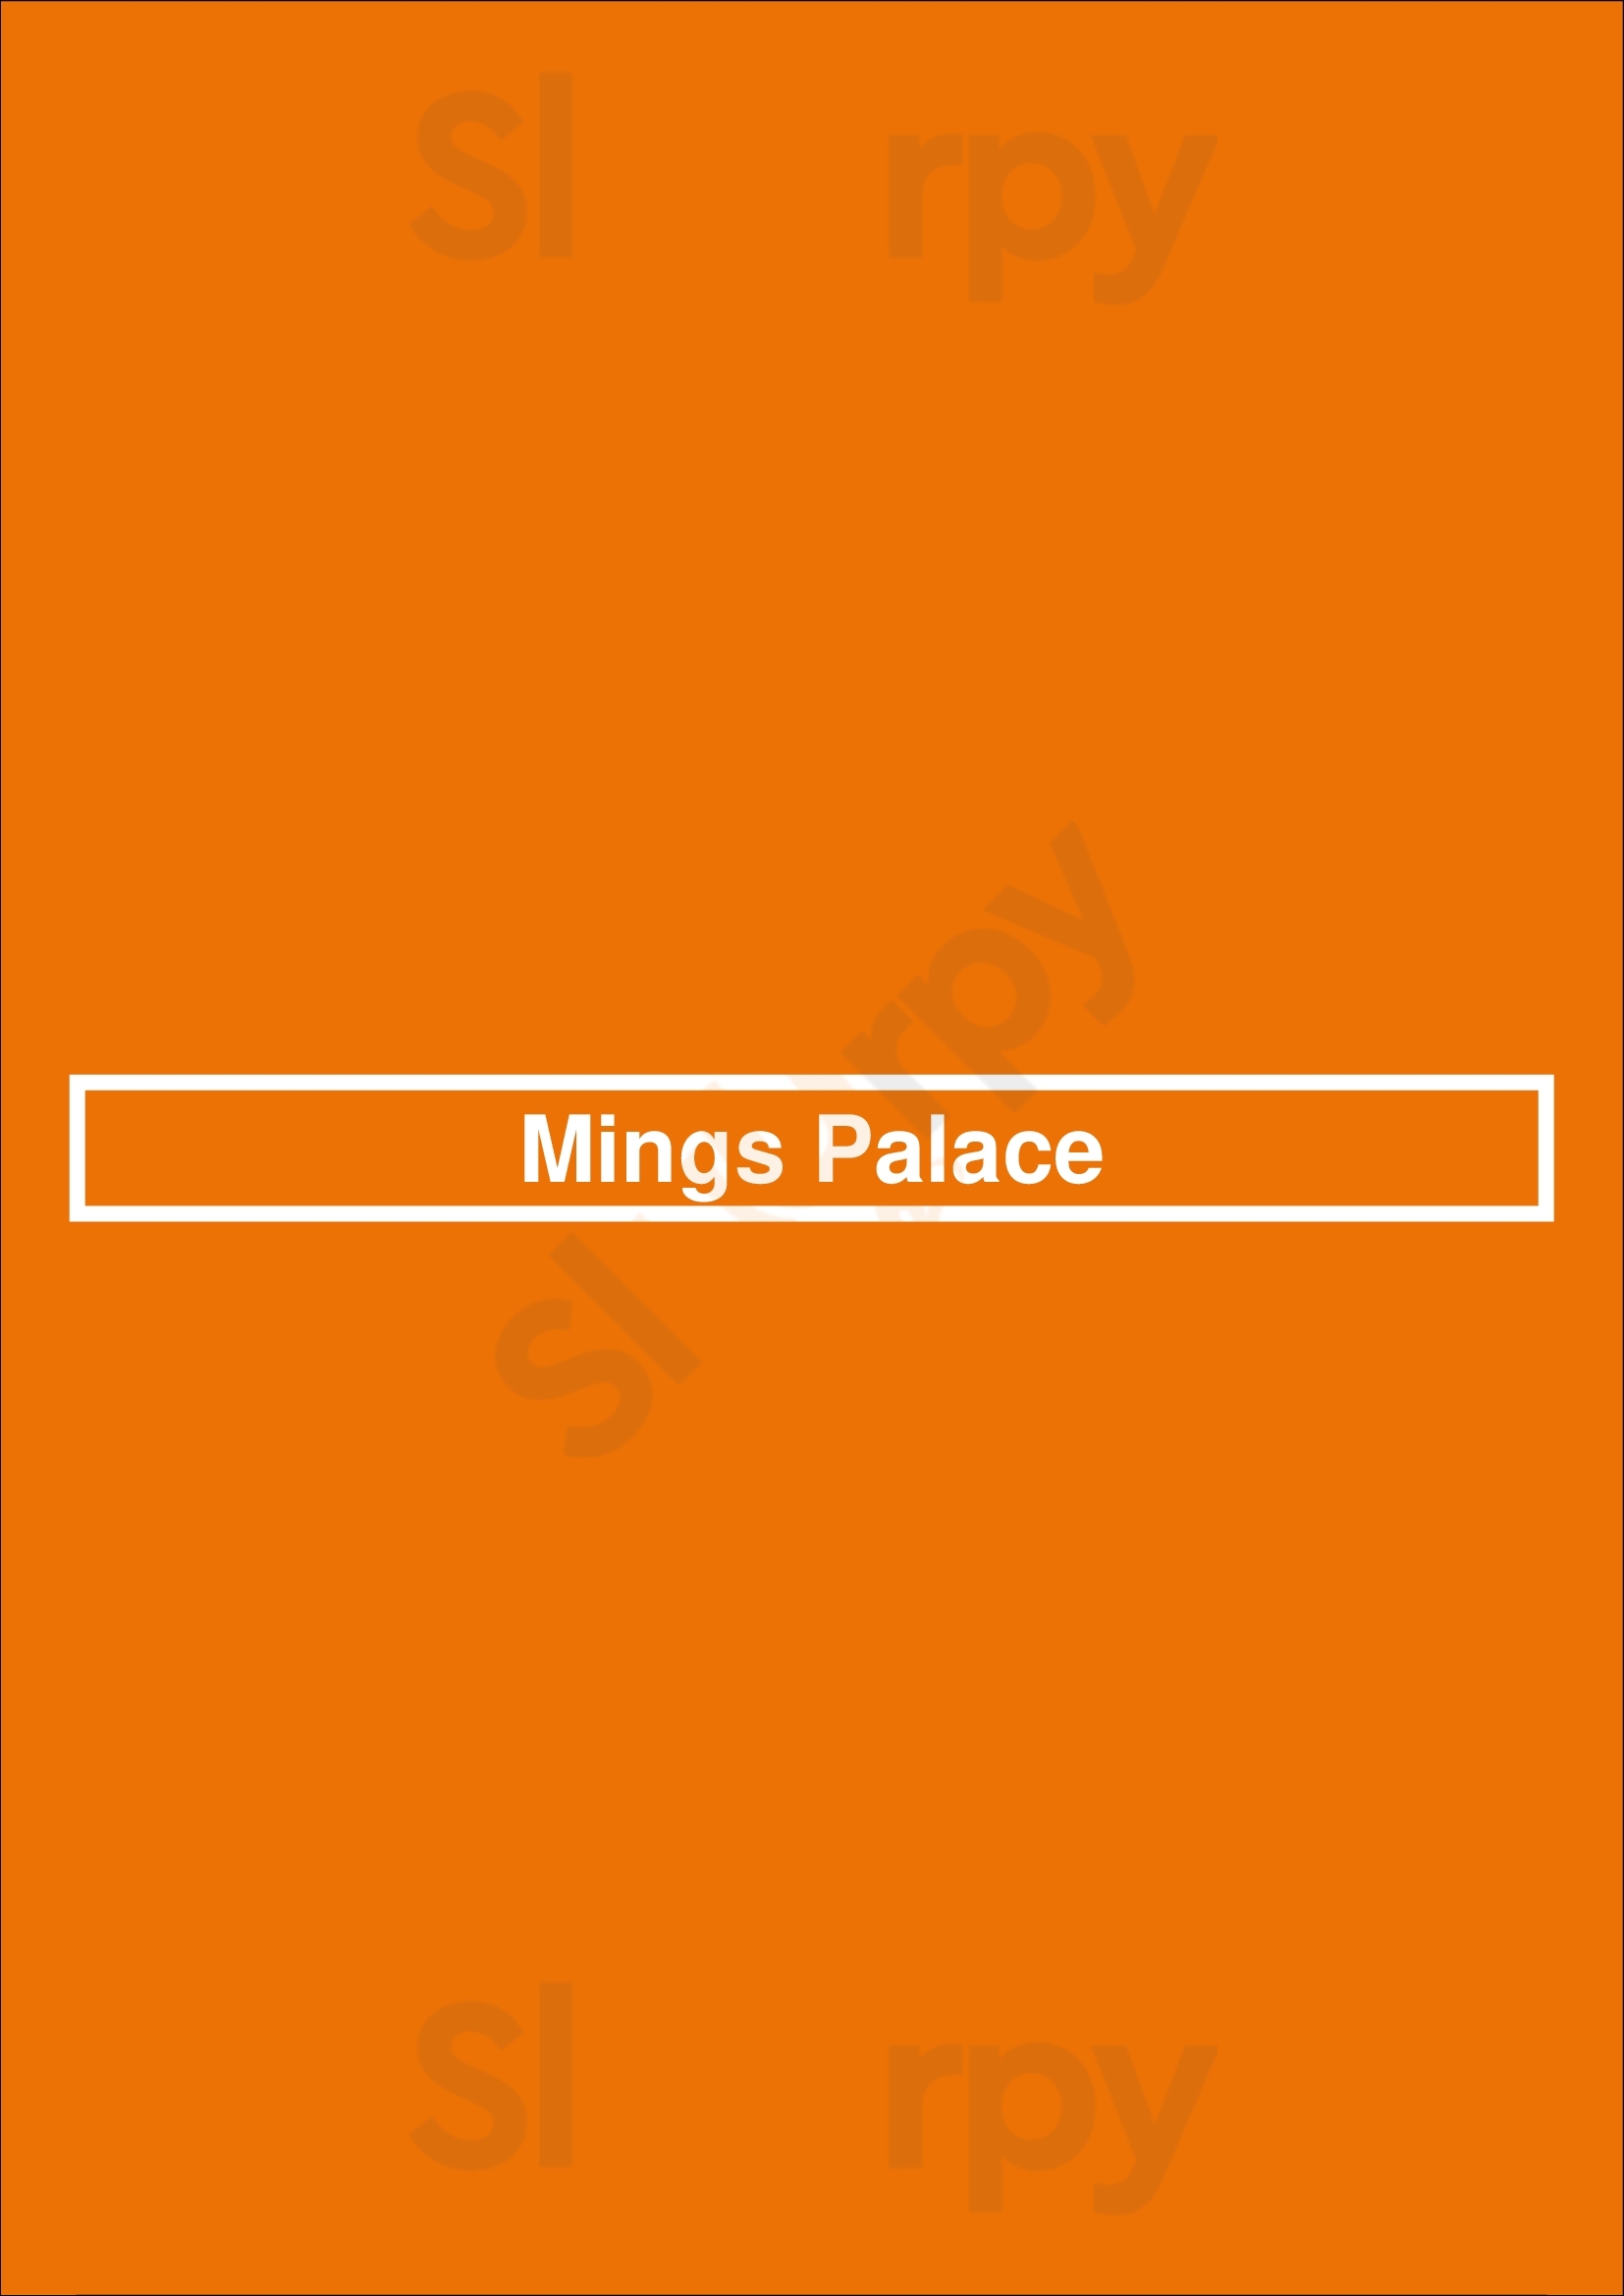 Mings Palace Adelaide Menu - 1